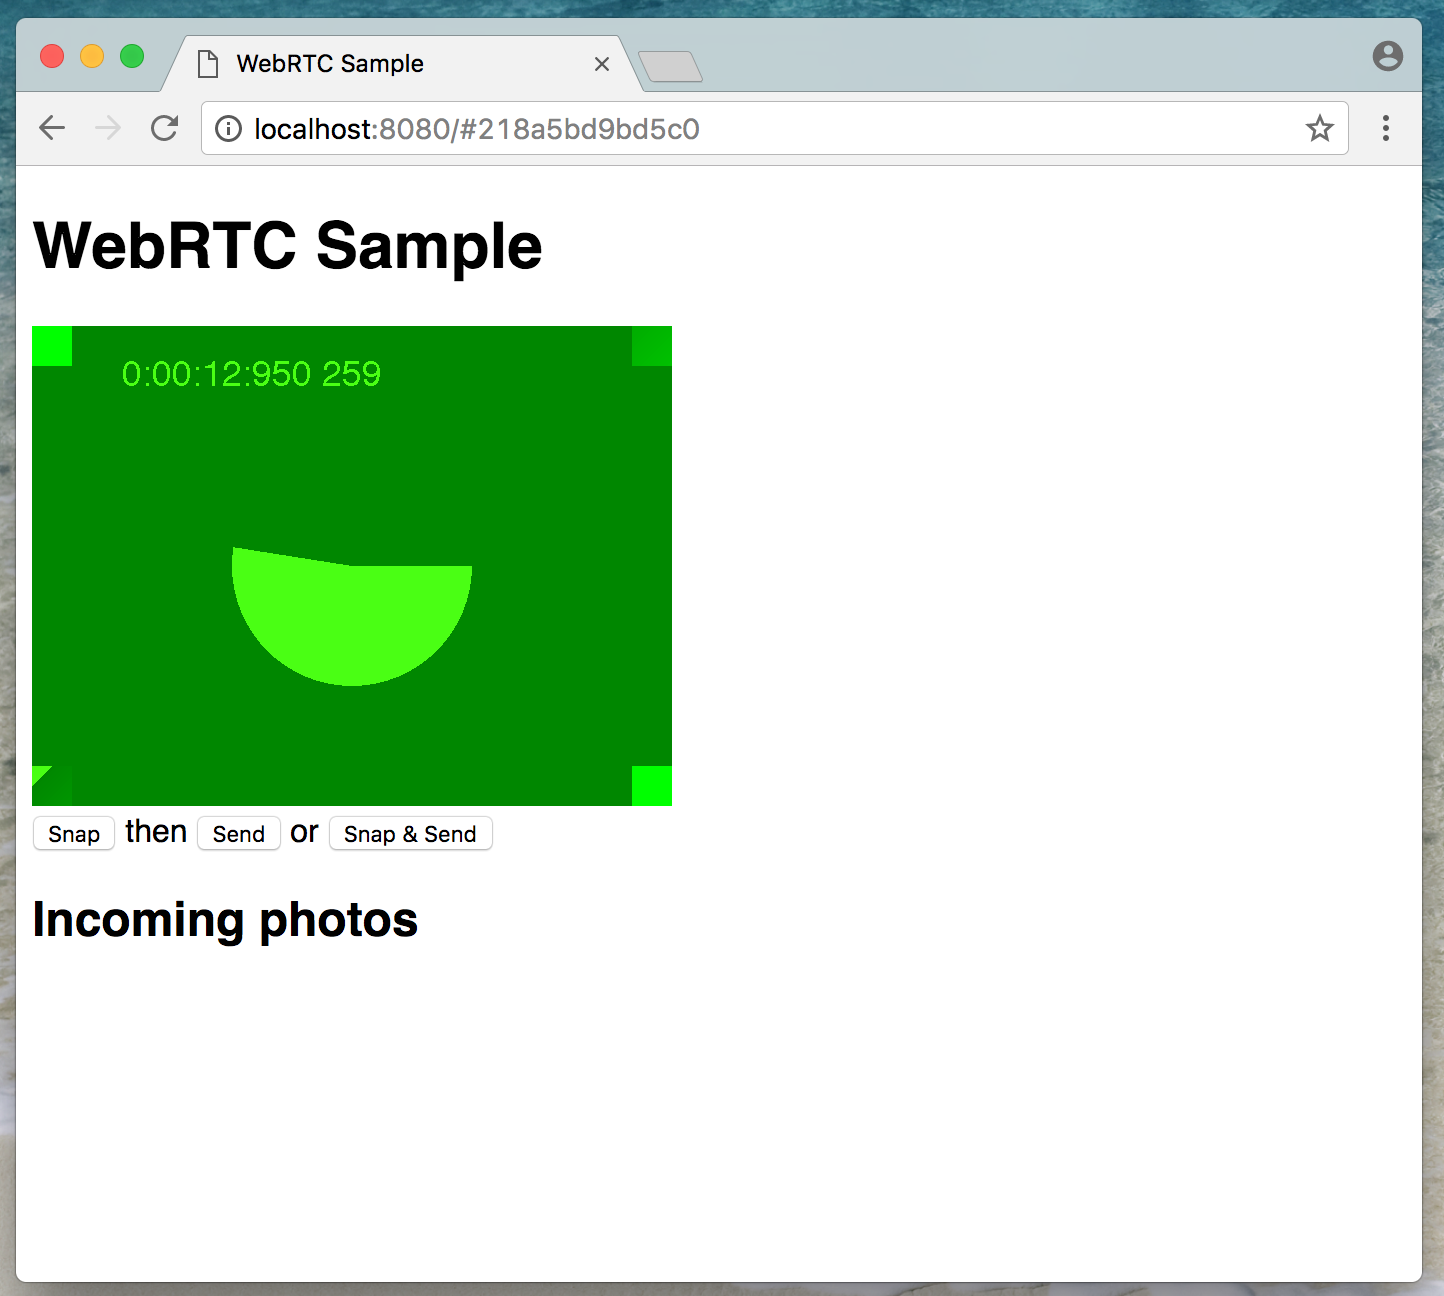 WebRTC Sample app during end-to-end test execution